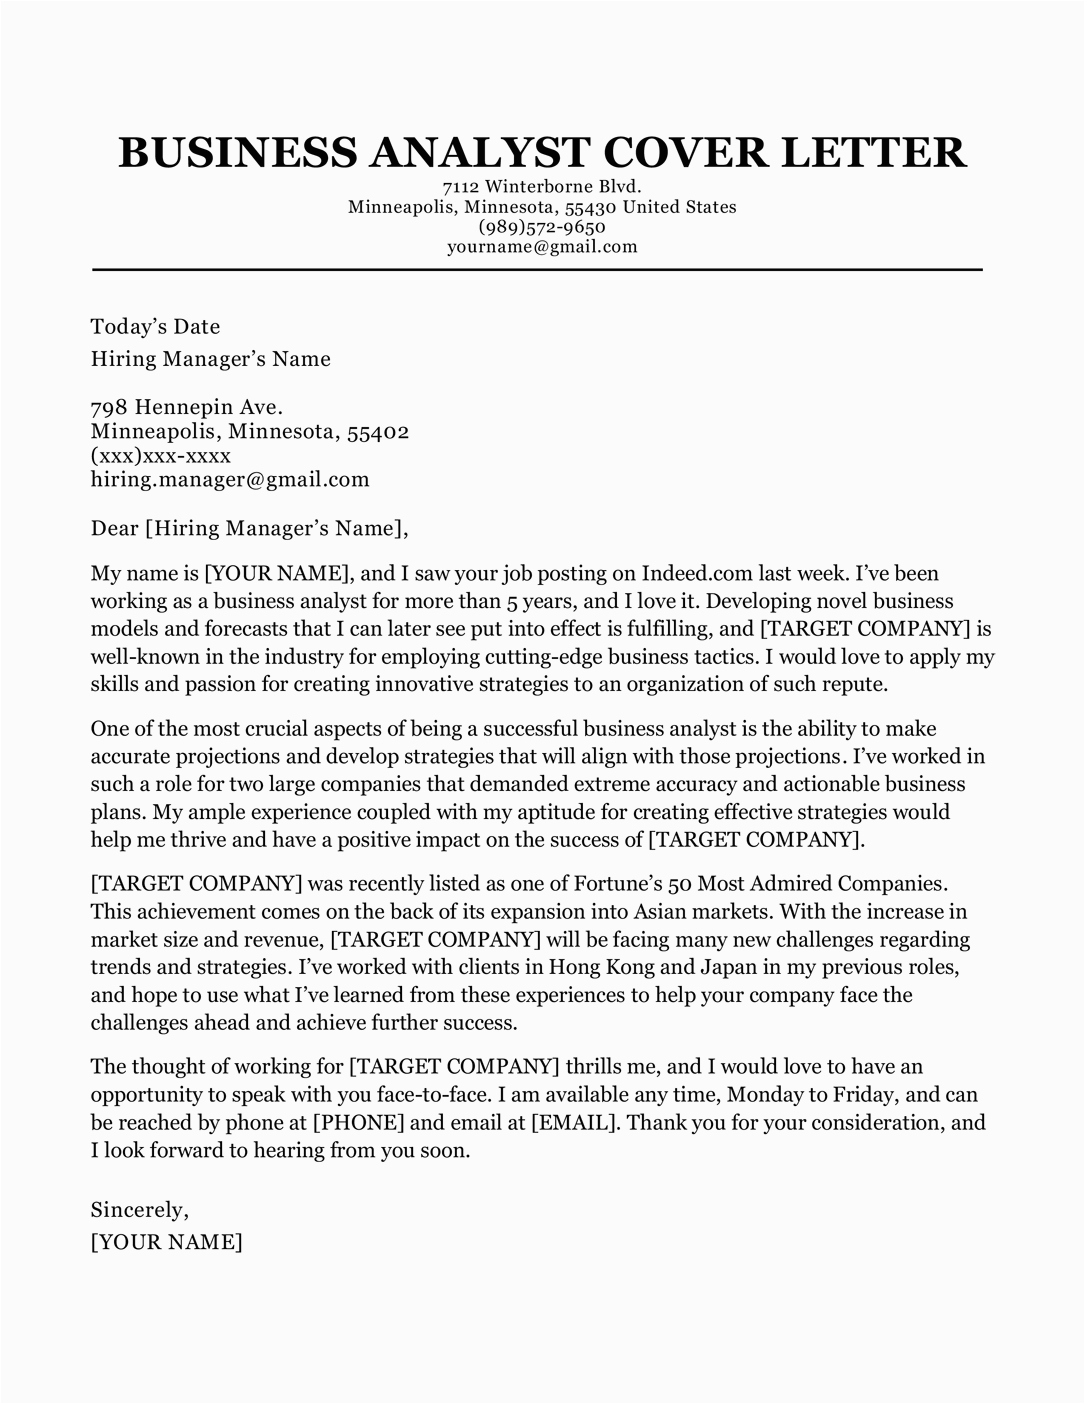 Sample Business Cover Letter for Resume Business Analyst Cover Letter Sample